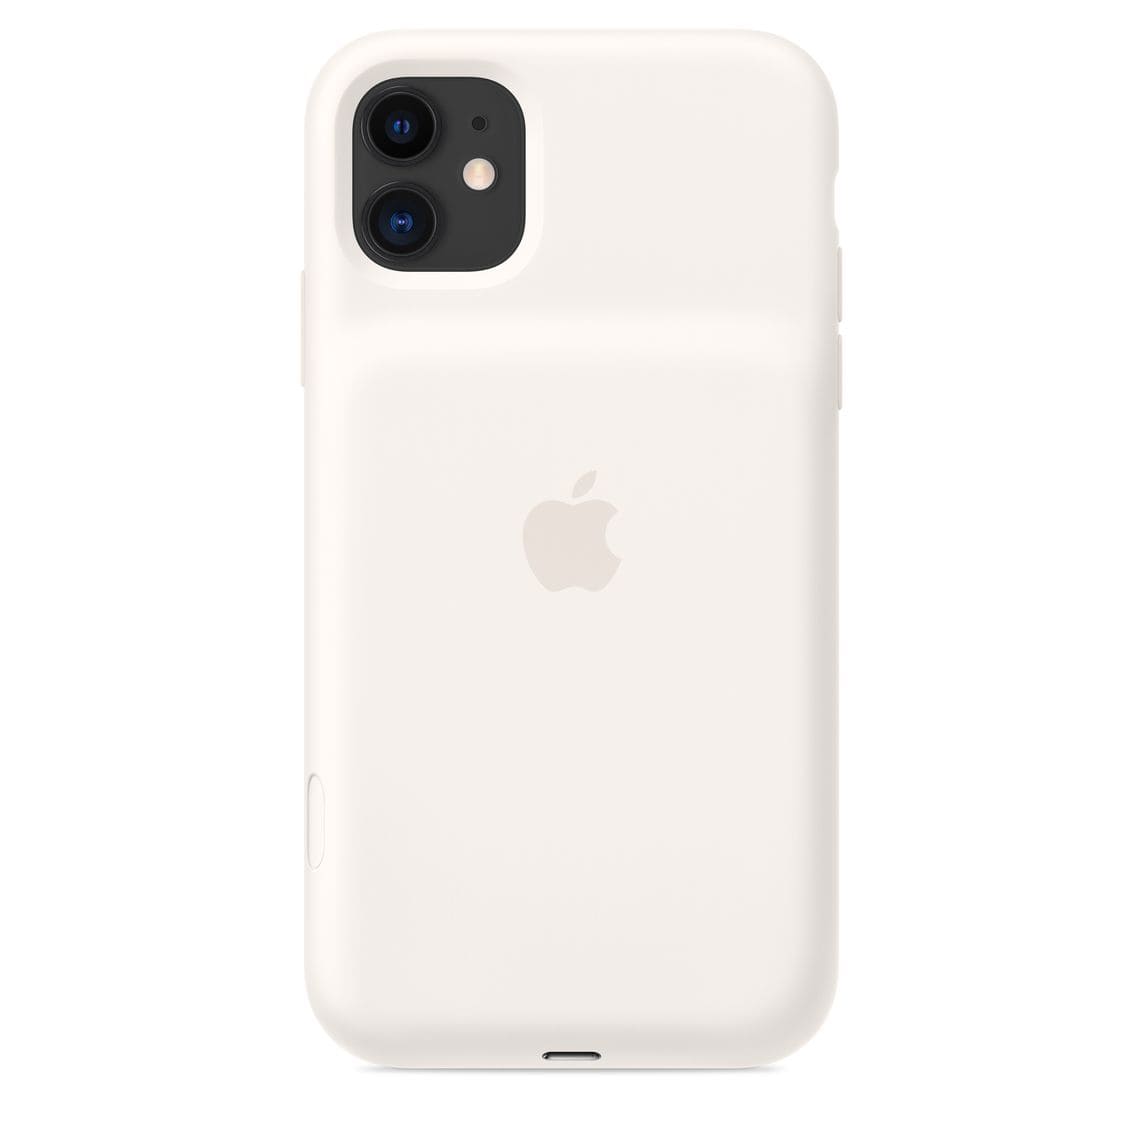 Фото — Чехол для смартфона Apple Smart Battery Case для iPhone 11, белый